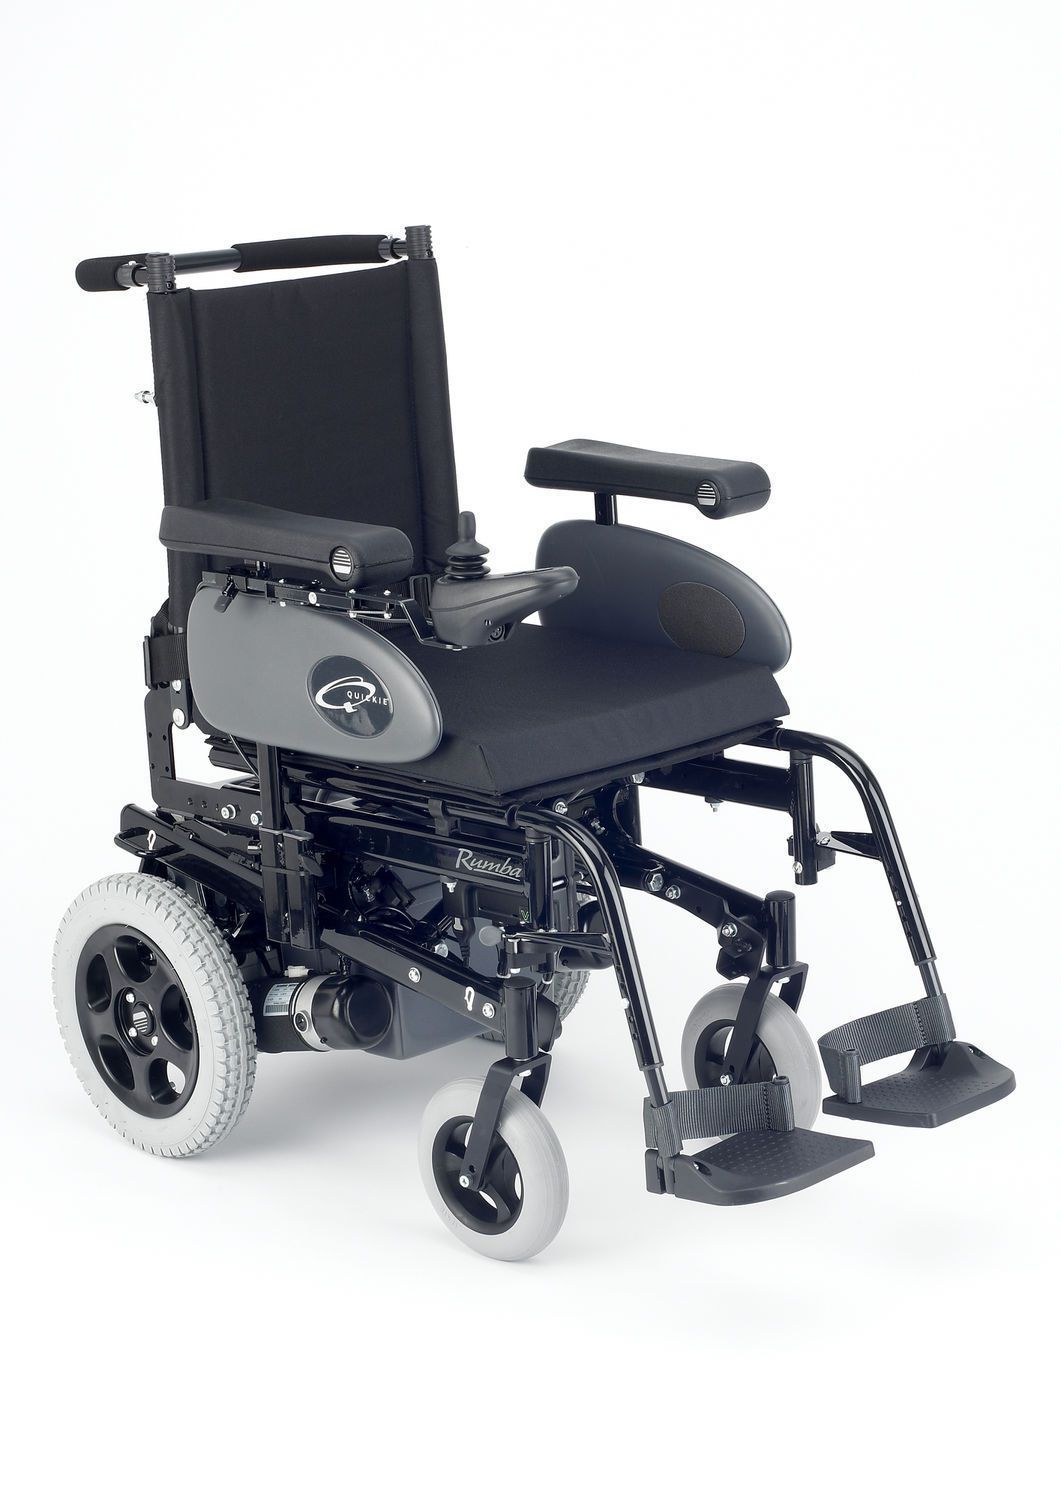 Electric wheelchair / exterior / interior Rumba modular Sunrise Medical